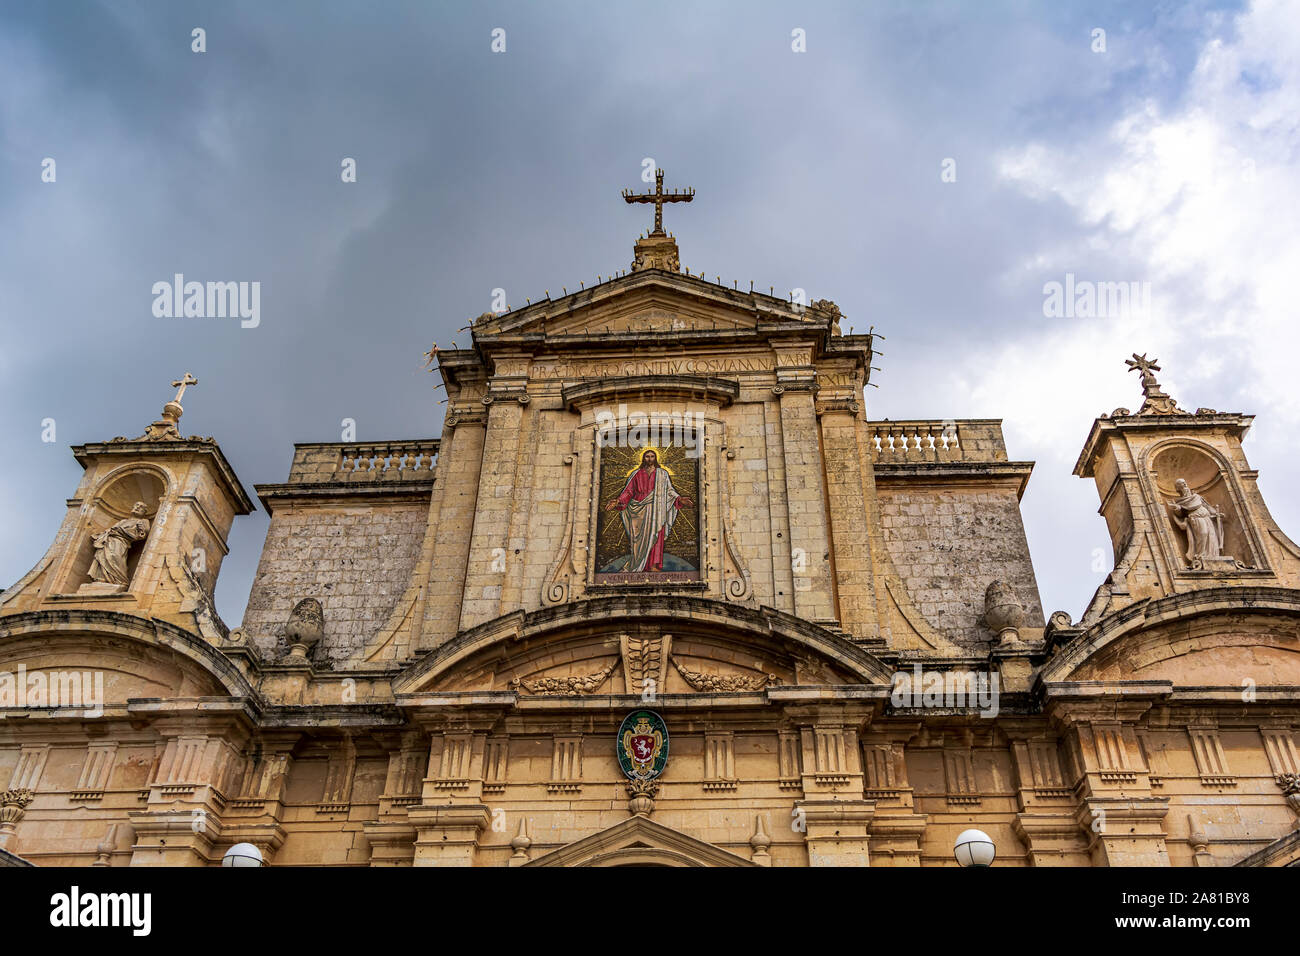 Facade of the Collegiate church of St Paul in Rabat, Malta. Stock Photo